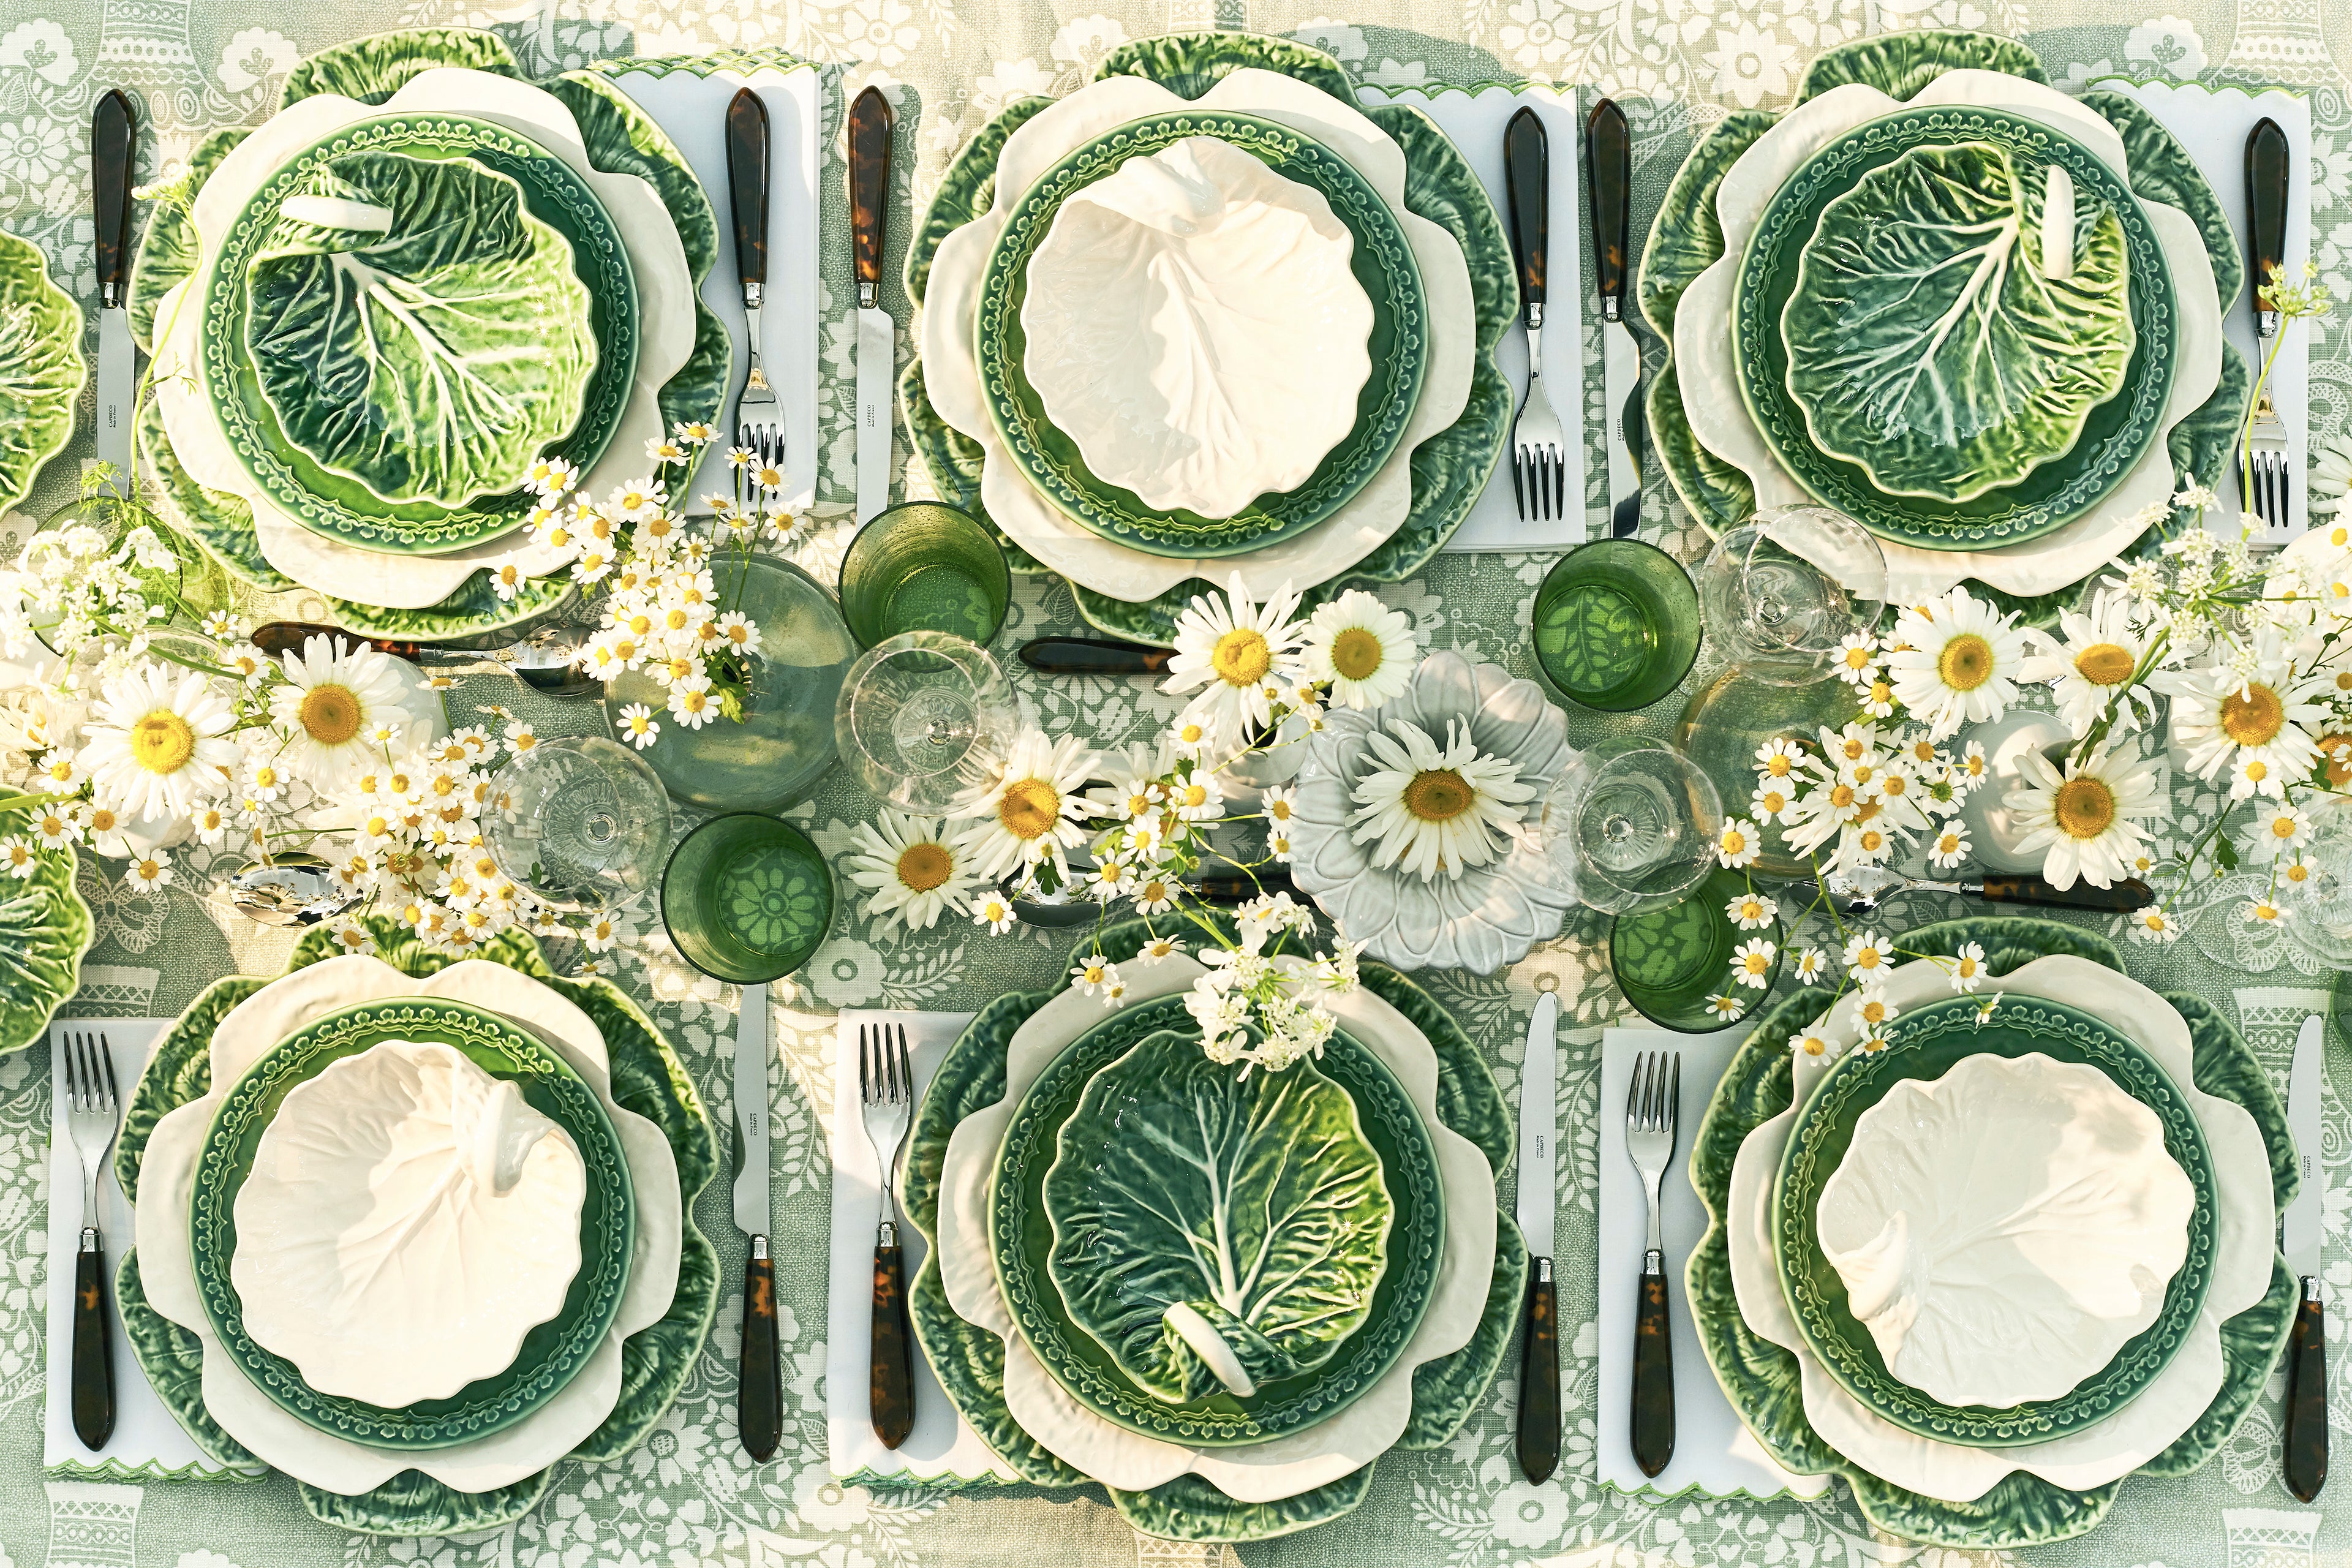 Rent: White Cabbage Leaf Dinner